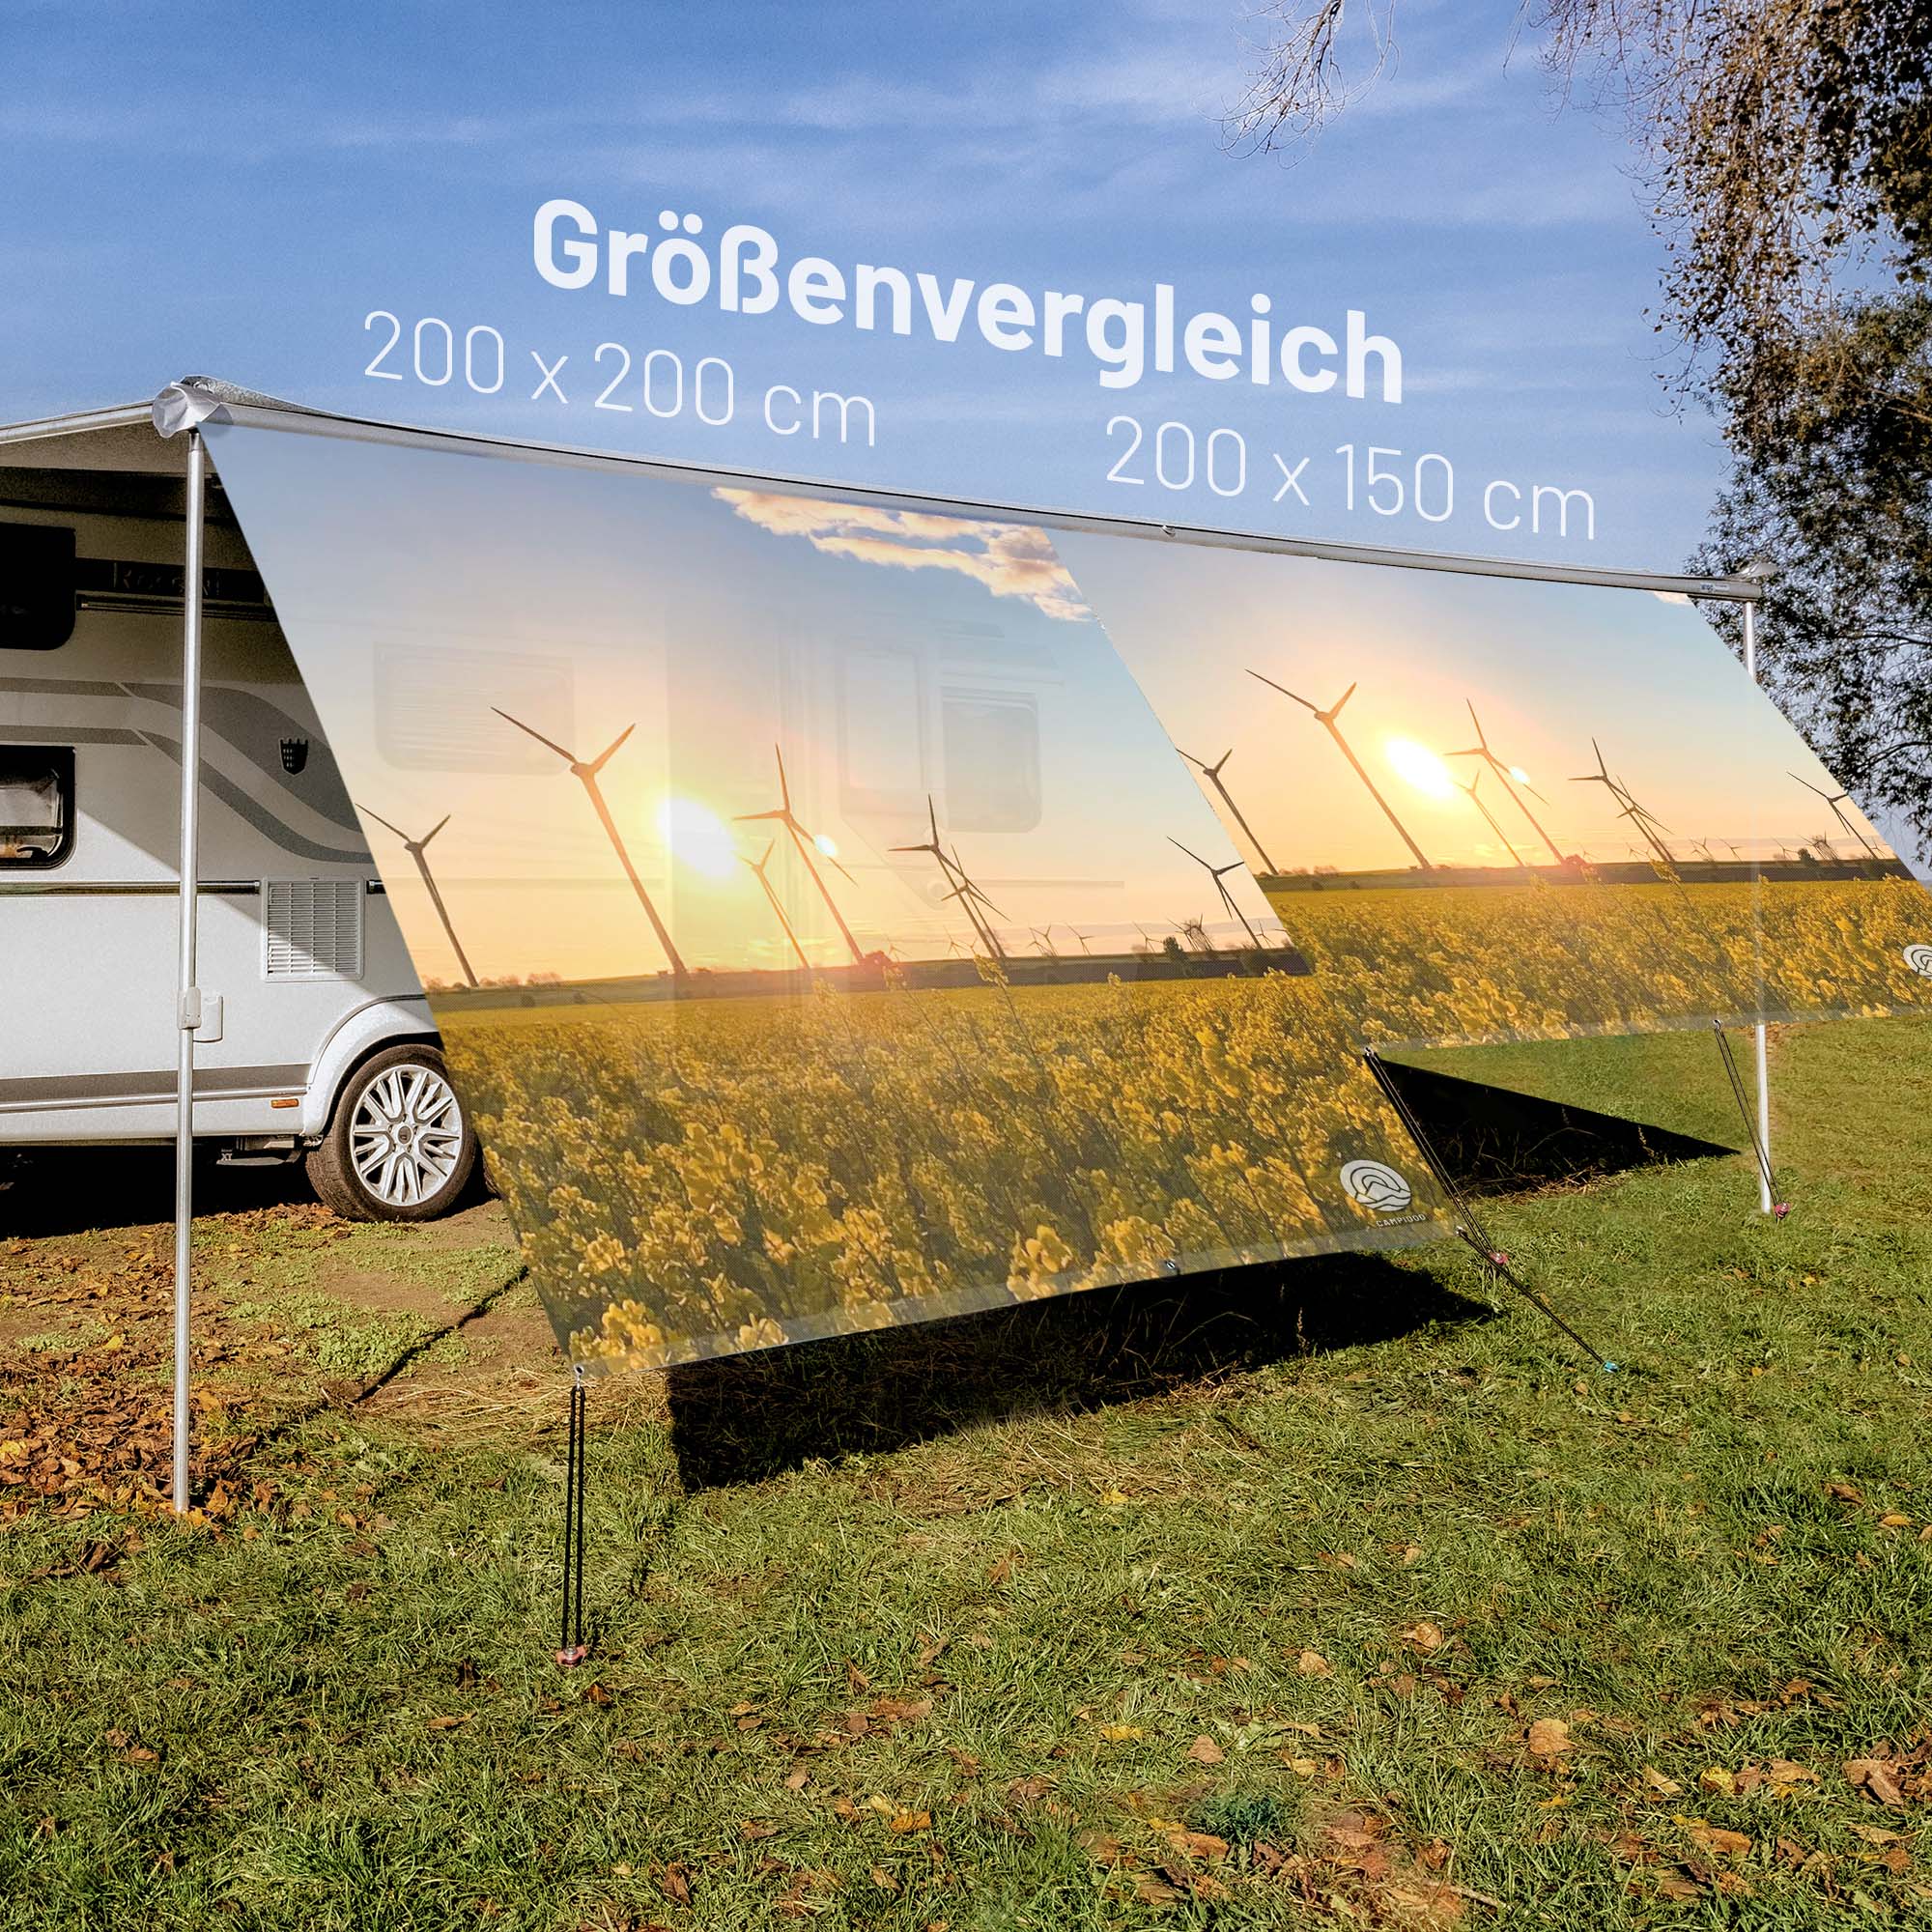 PVC Camping Sonnenschutz - Motiv RAPSFELD 150cm Hoch